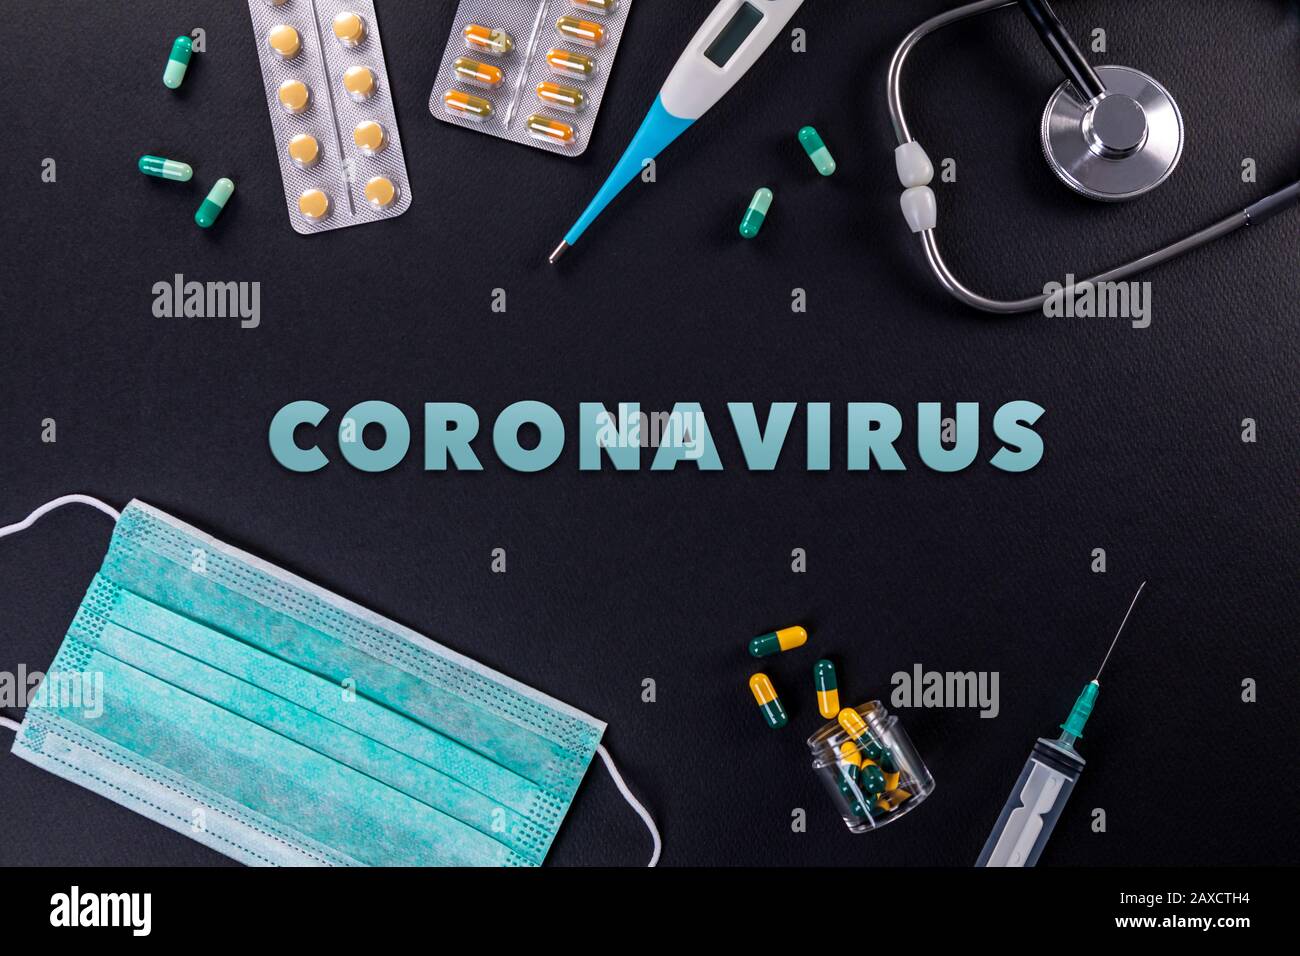 Protective masks, medicines, thermometer, stethoscope and syringe with coronavirus text on a black background. Novel coronavirus 2019-nCoV, MERS-Cov m Stock Photo